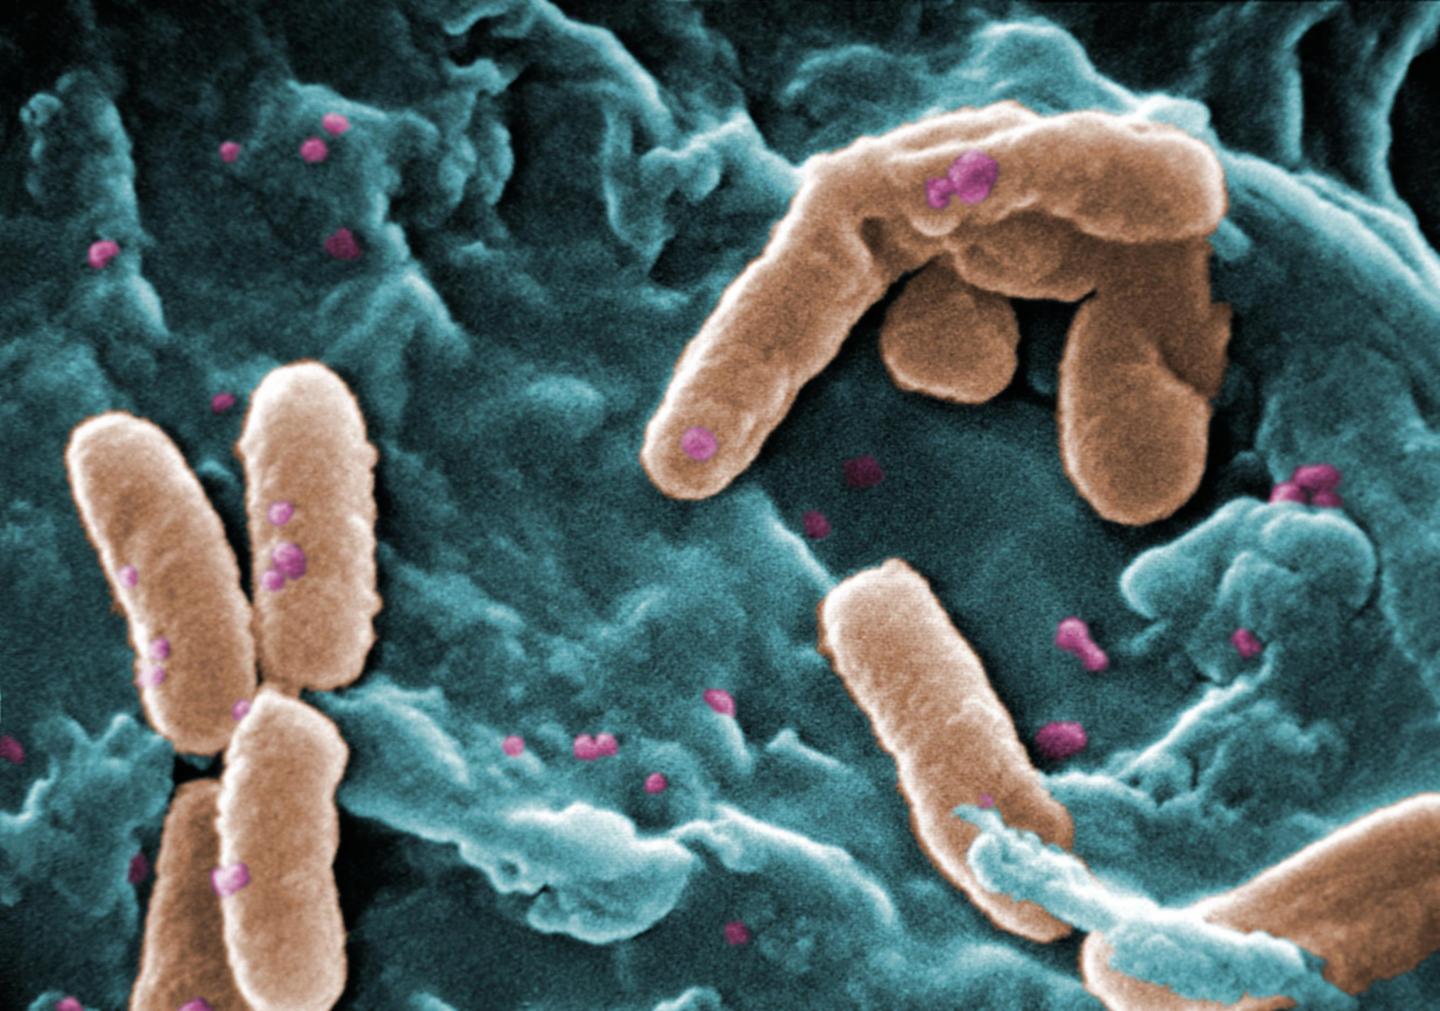 Pseudomonas Bacteria